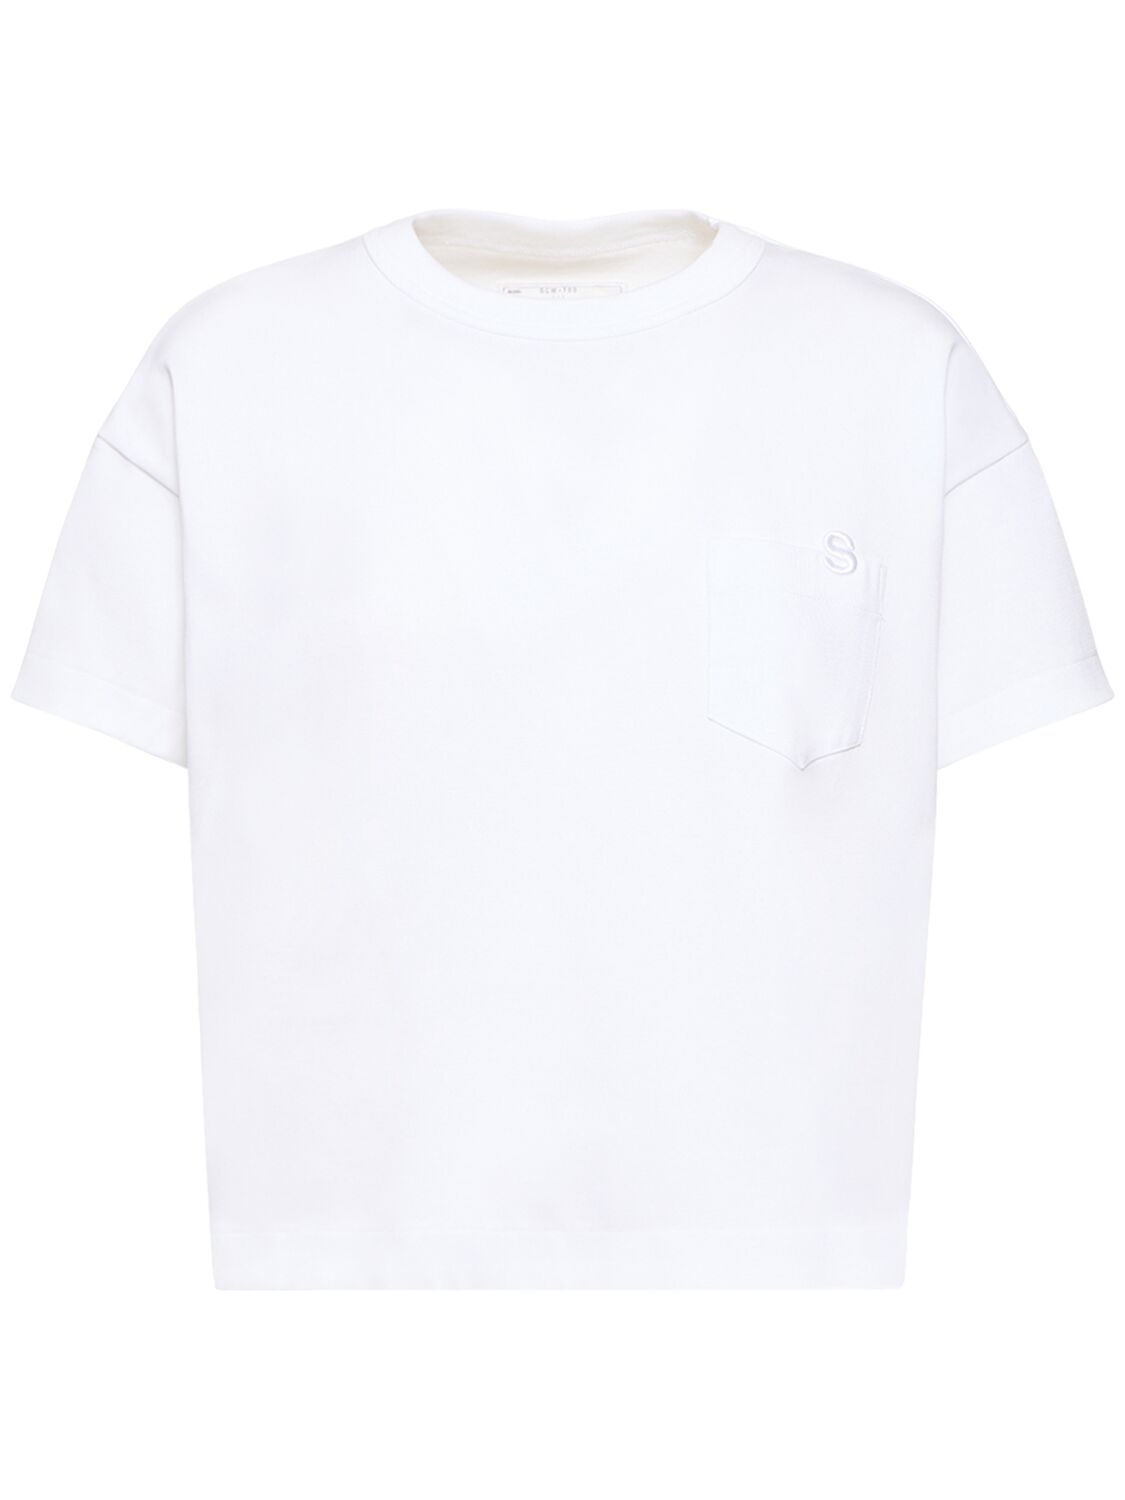 Image of Cotton Jersey T-shirt W/ Pocket